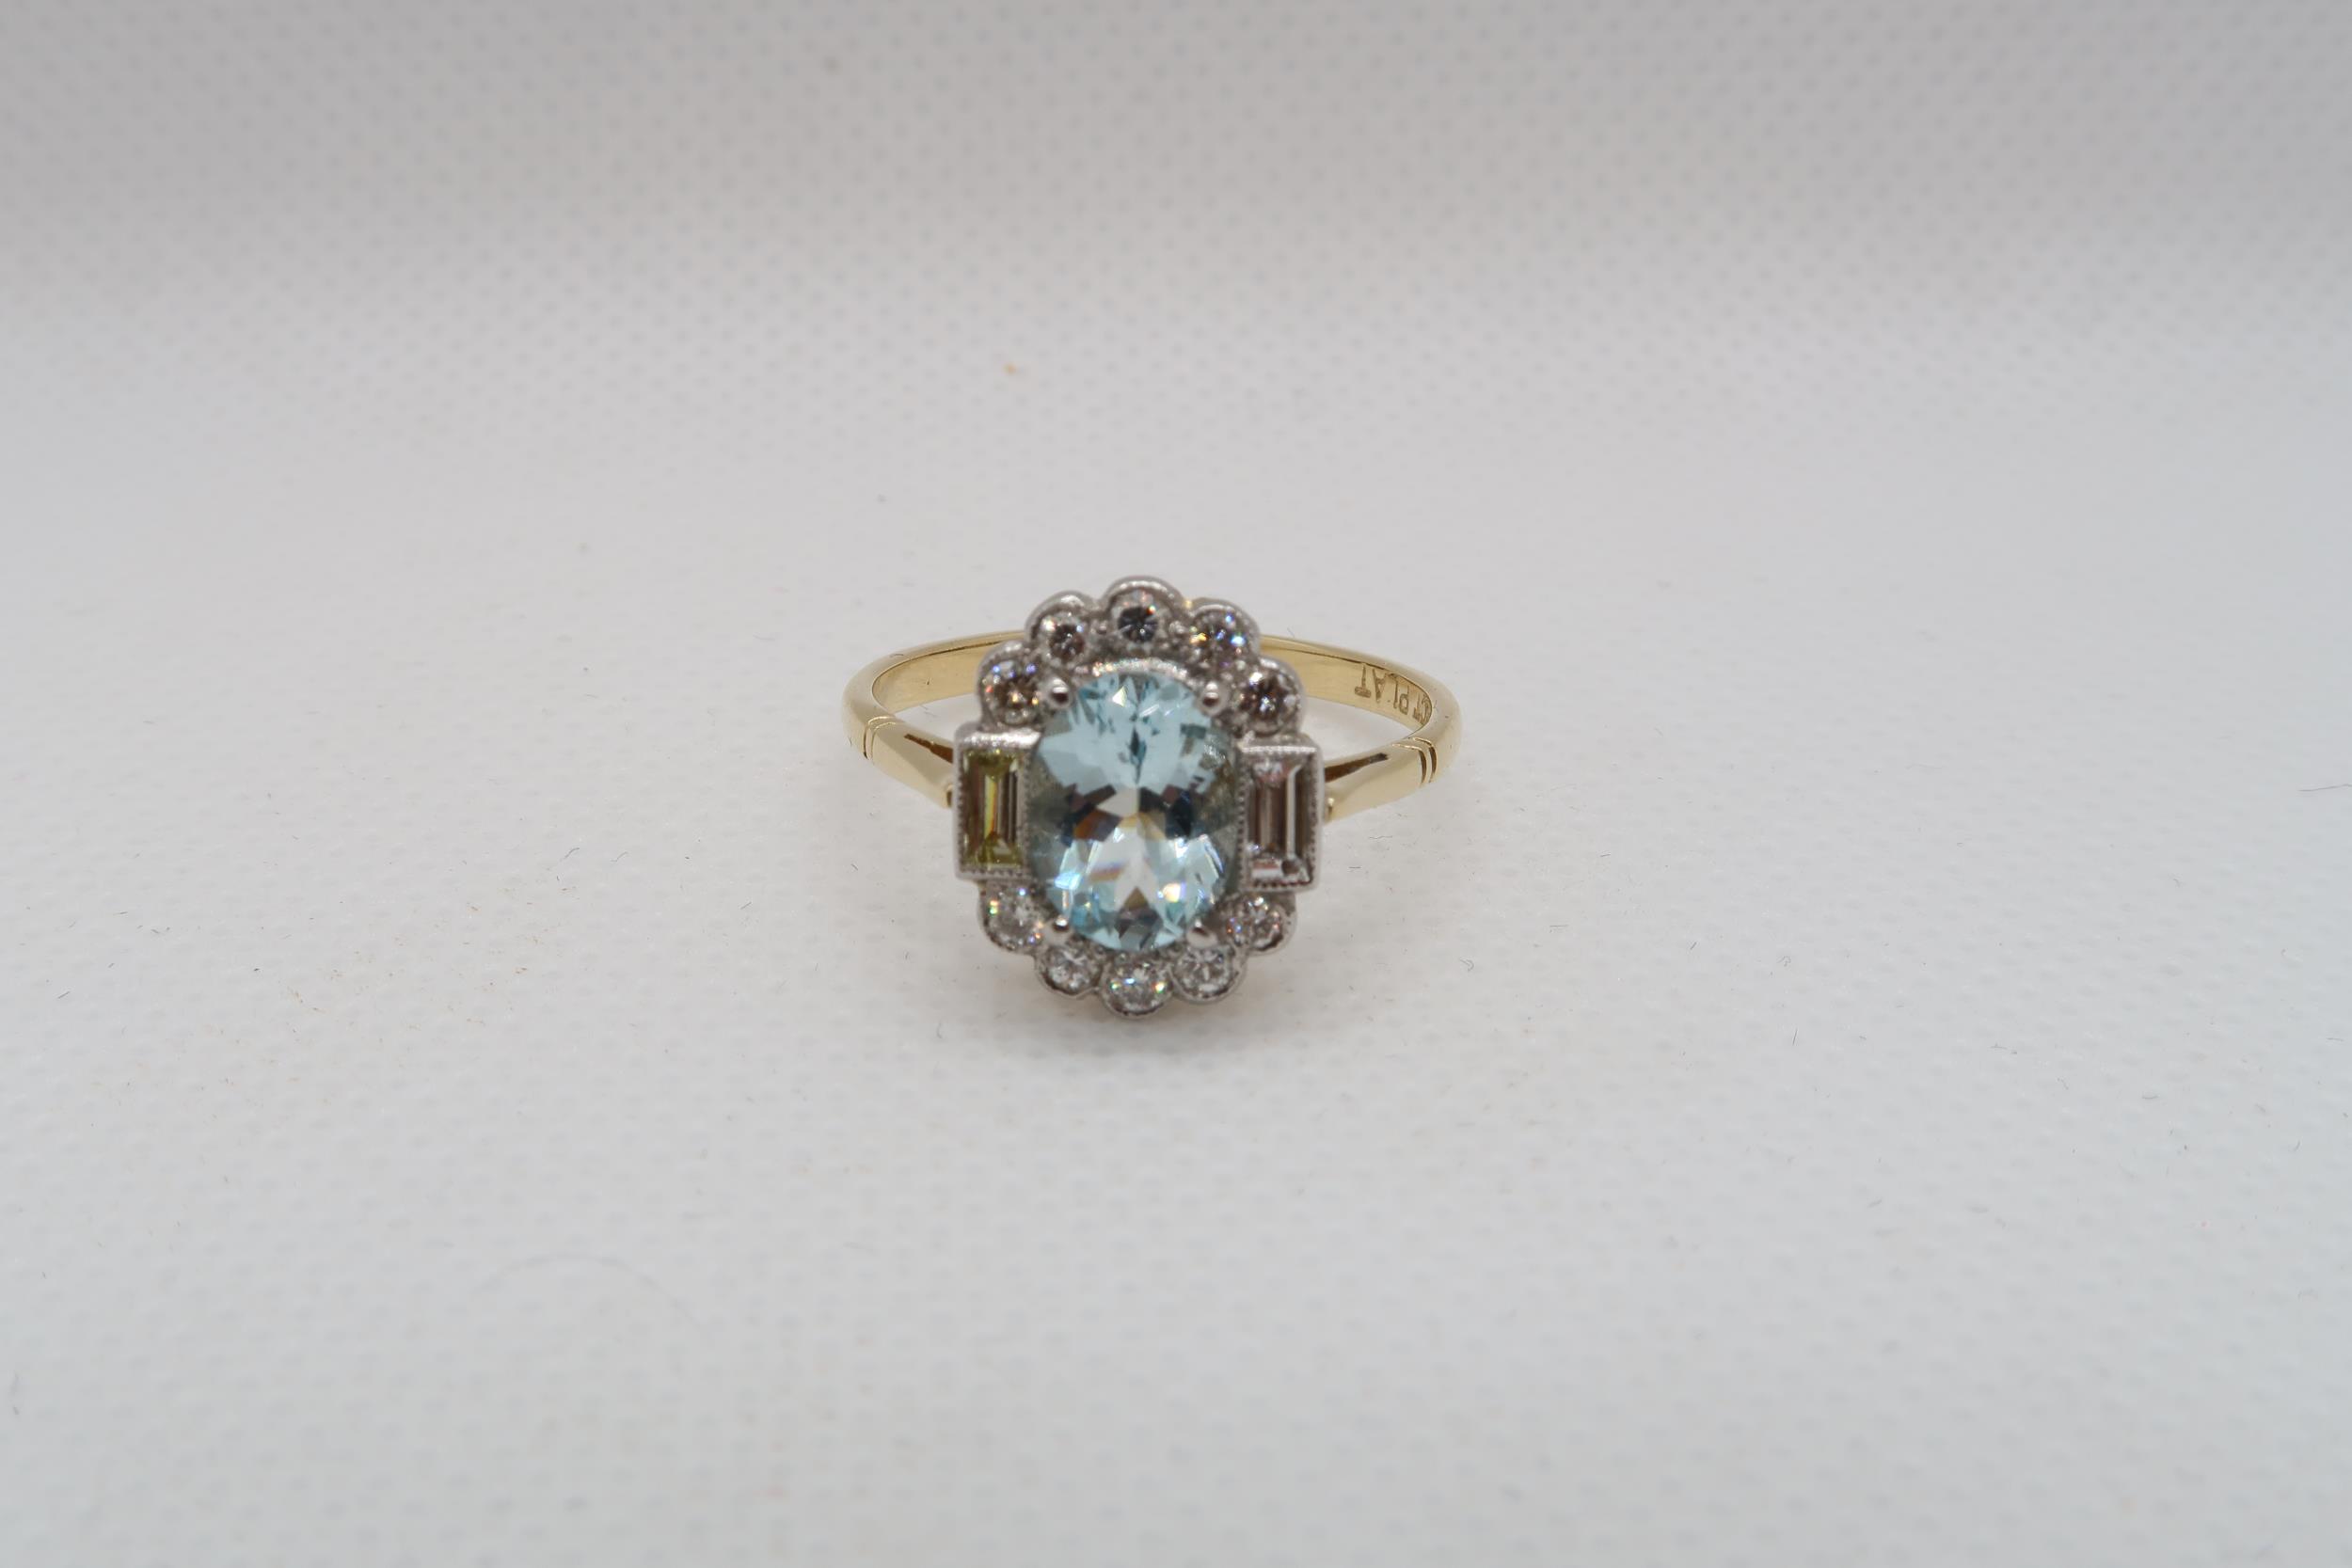 An 18ct yellow gold and platinum Art Deco style aquamarine and diamond ring - diamonds are bright